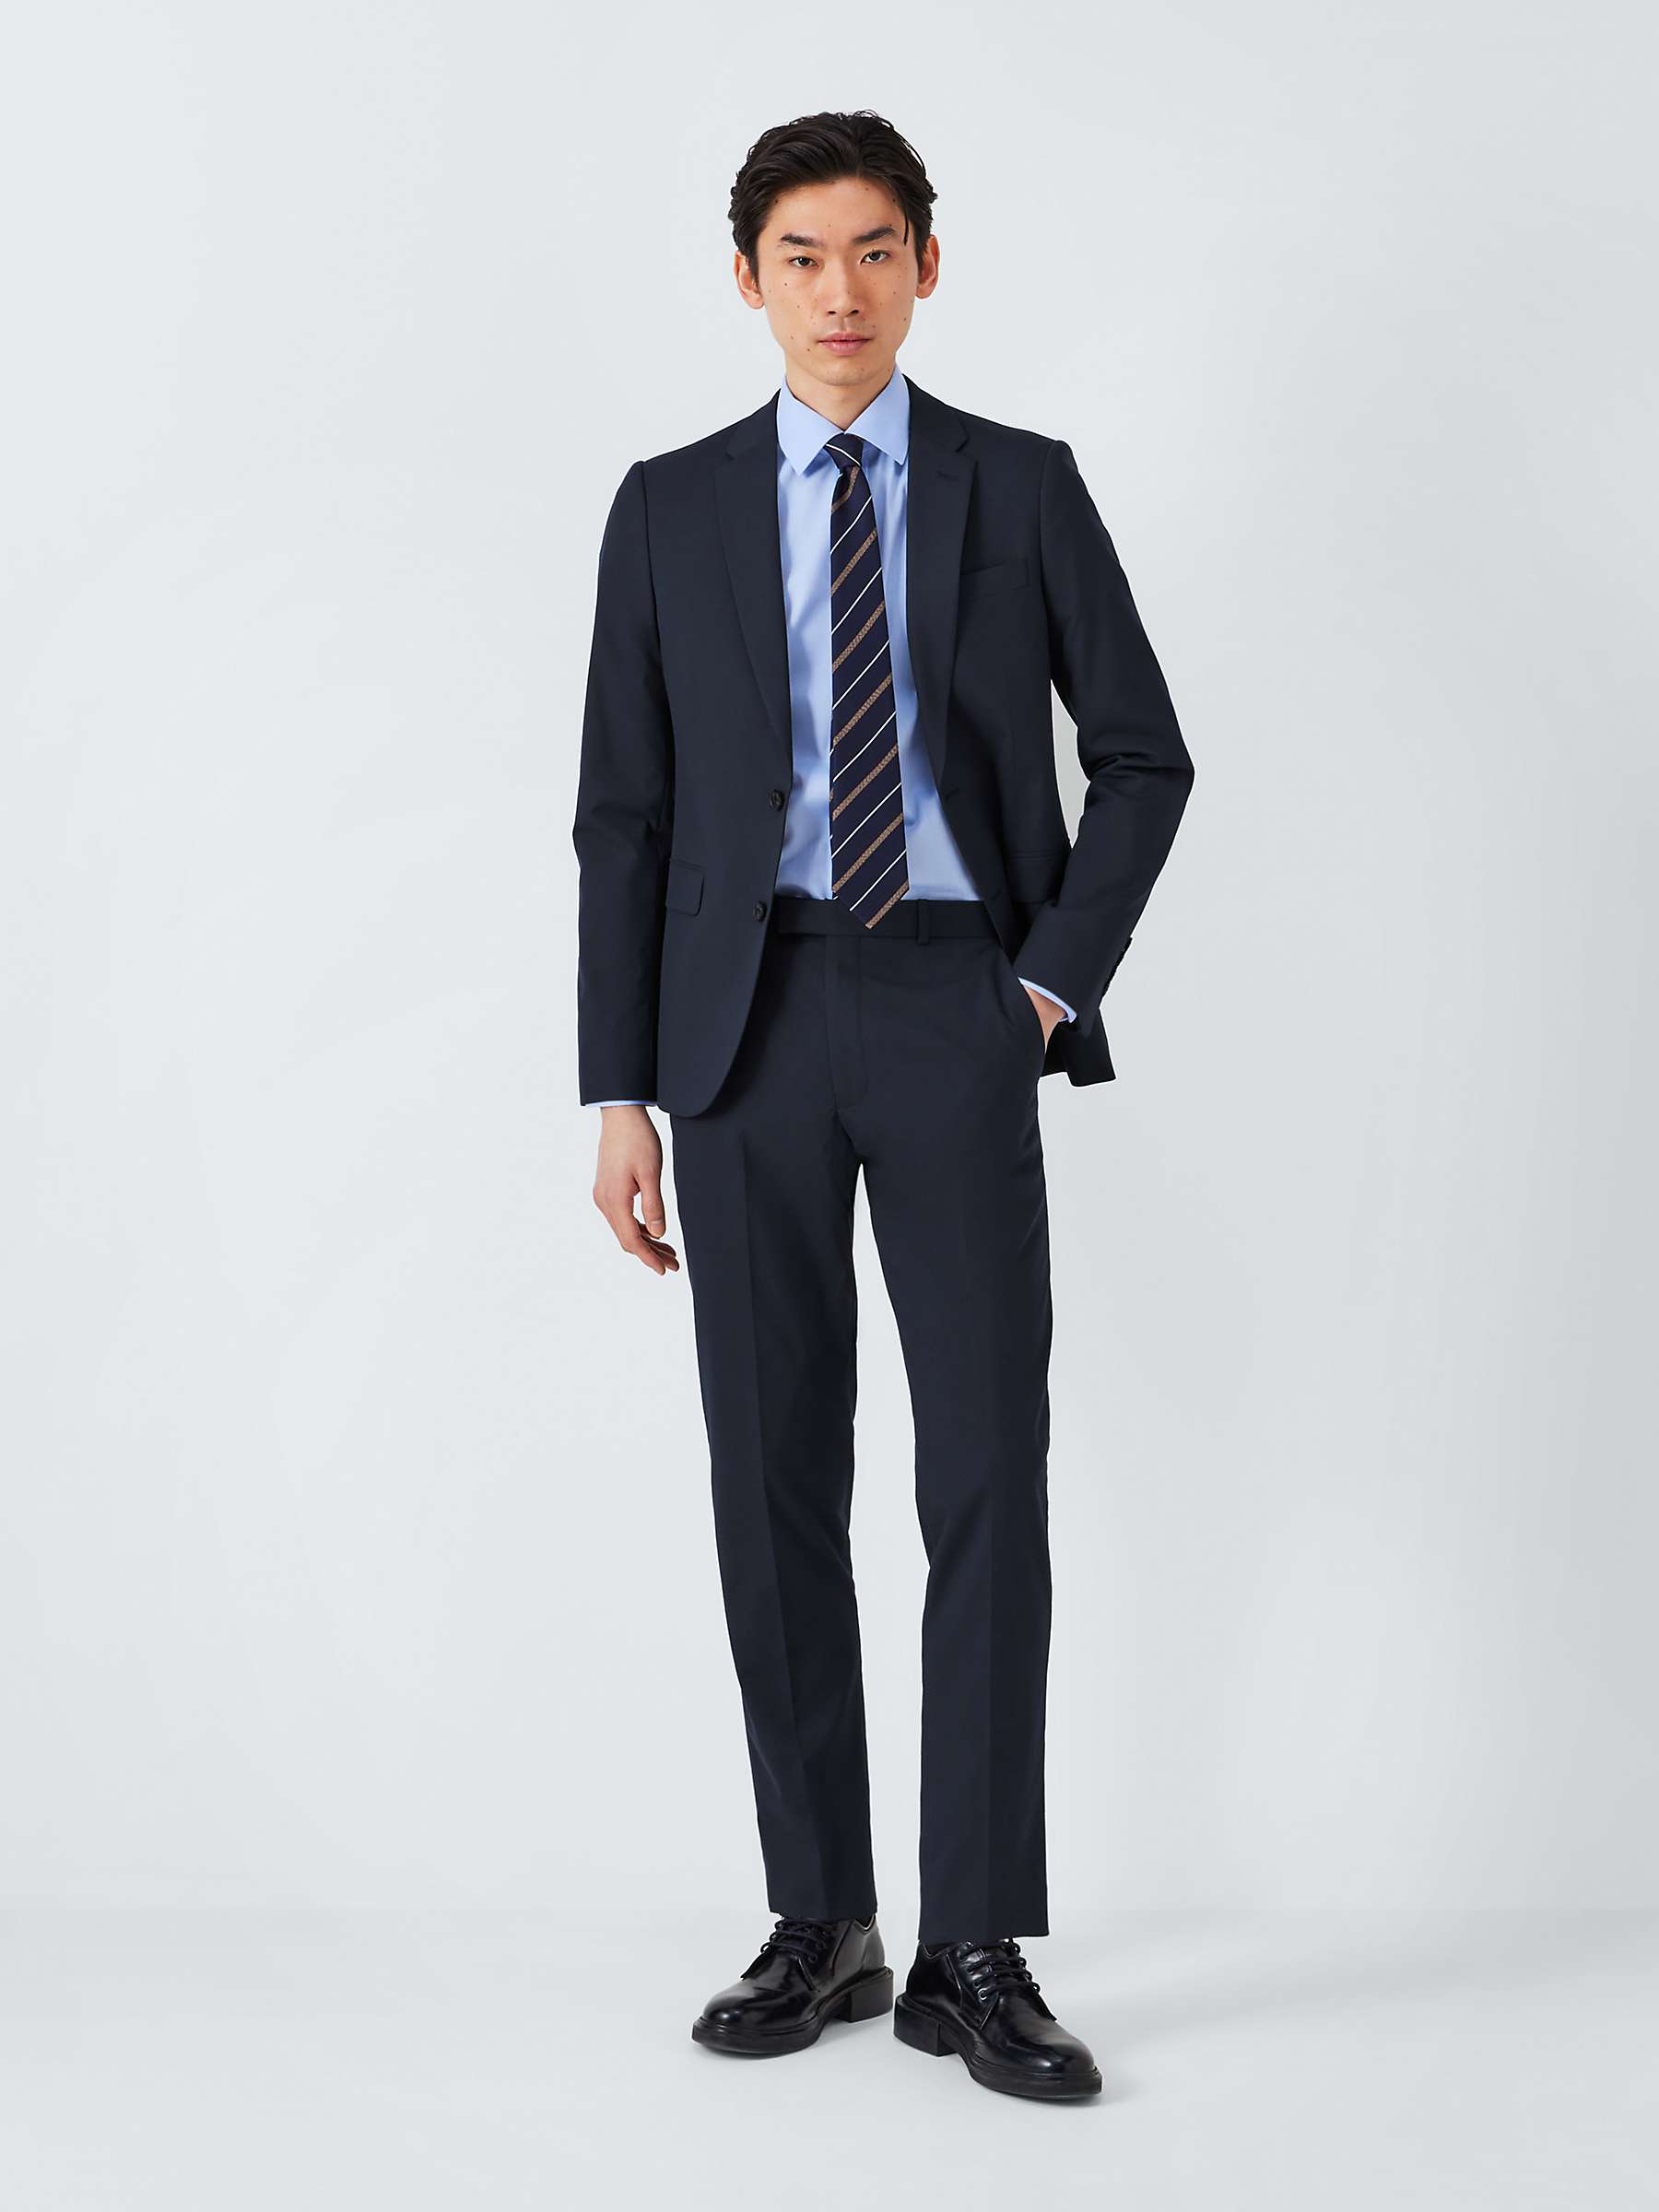 Buy John Lewis Slim Fit Starter Suit Trousers Online at johnlewis.com